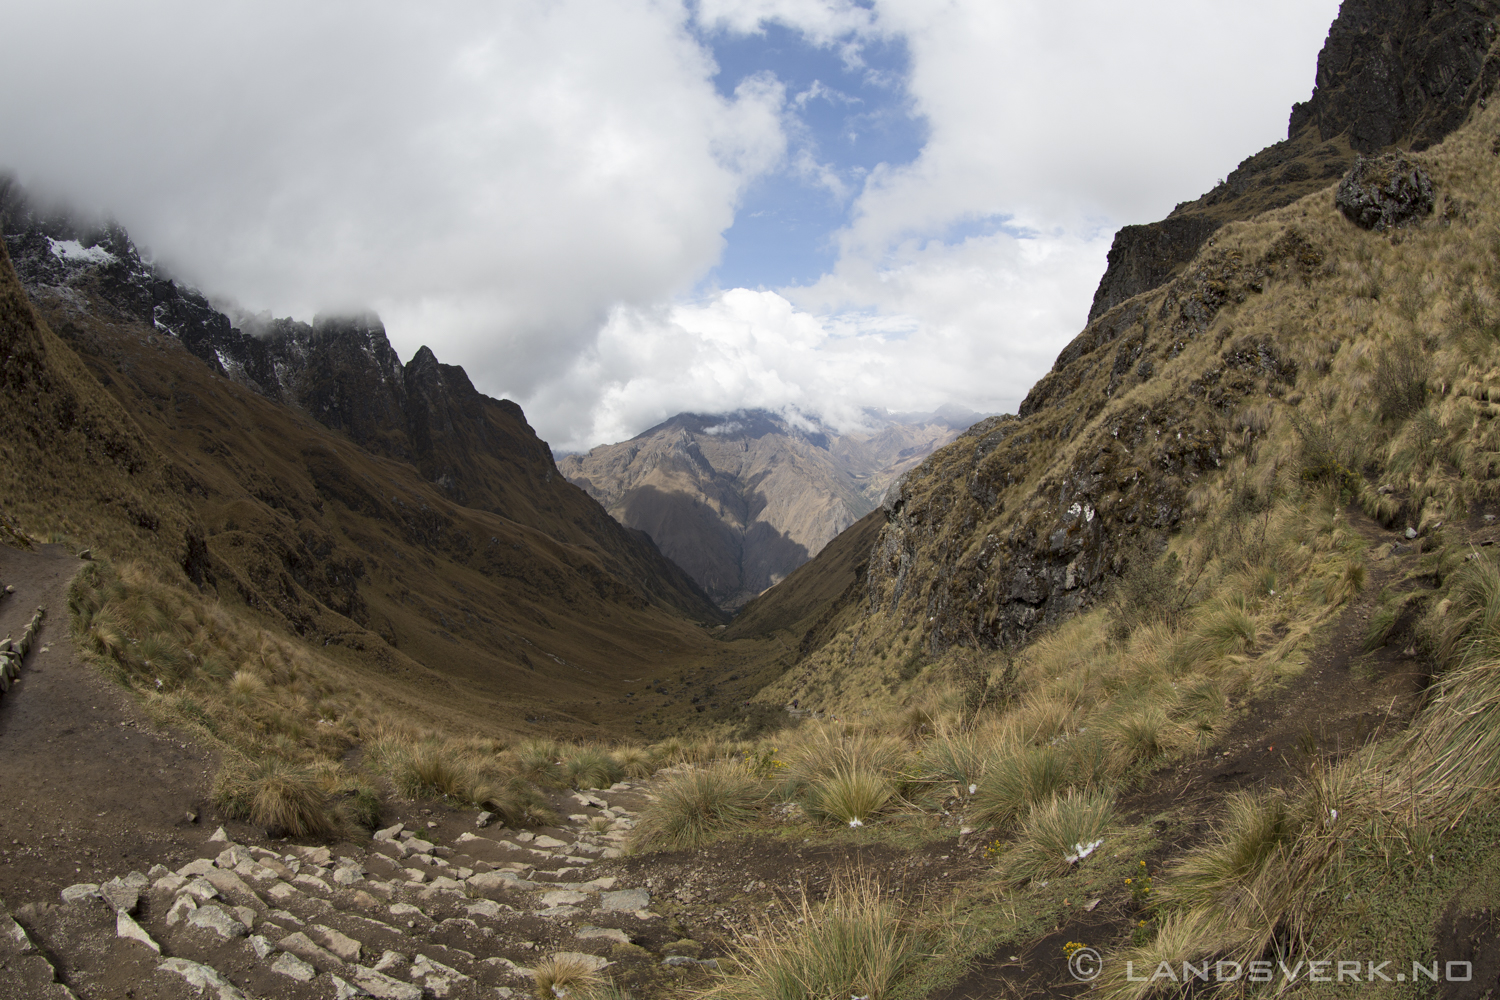 On top of Dead Woman's Pass, 4215 MASL. The Inka Trail to Machu Picchu, Peru. 

(Canon EOS 5D Mark III / Canon EF 8-15mm 
f/4 L USM Fisheye)